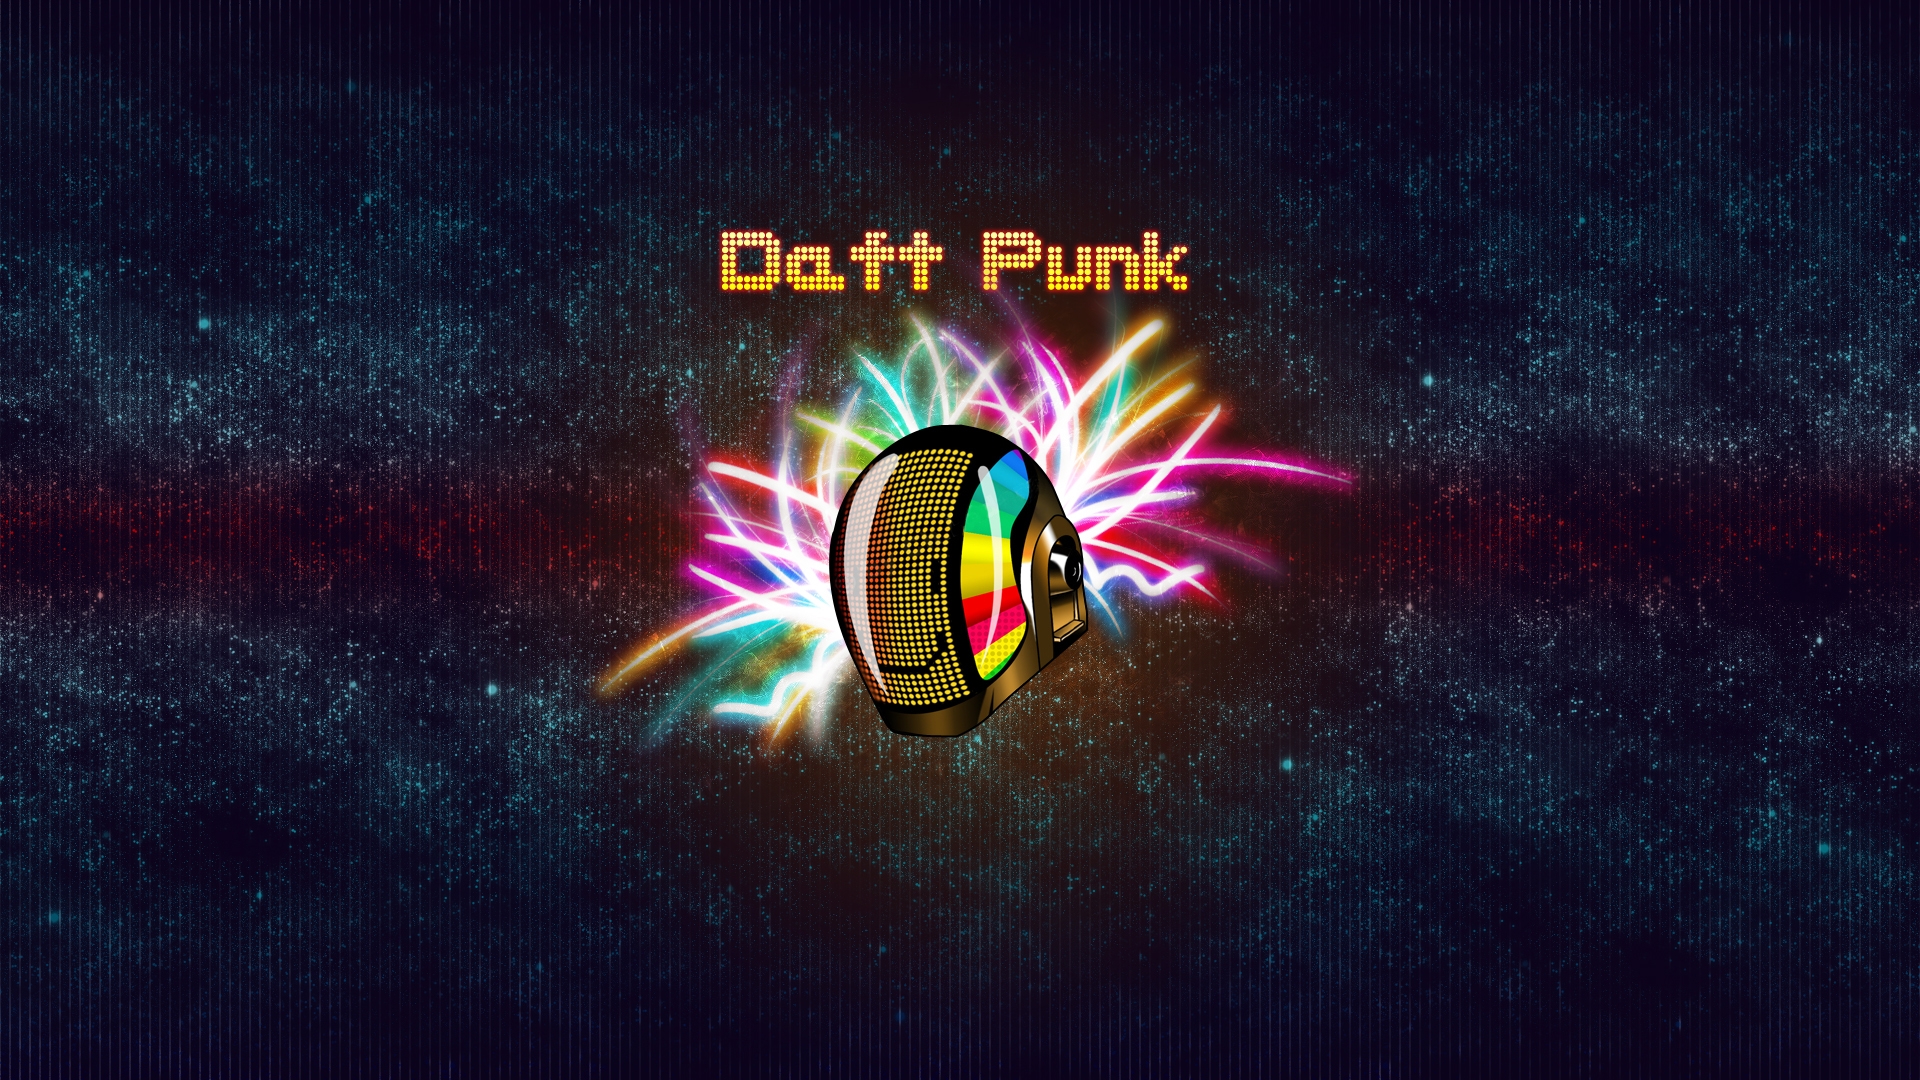 Daft punk background